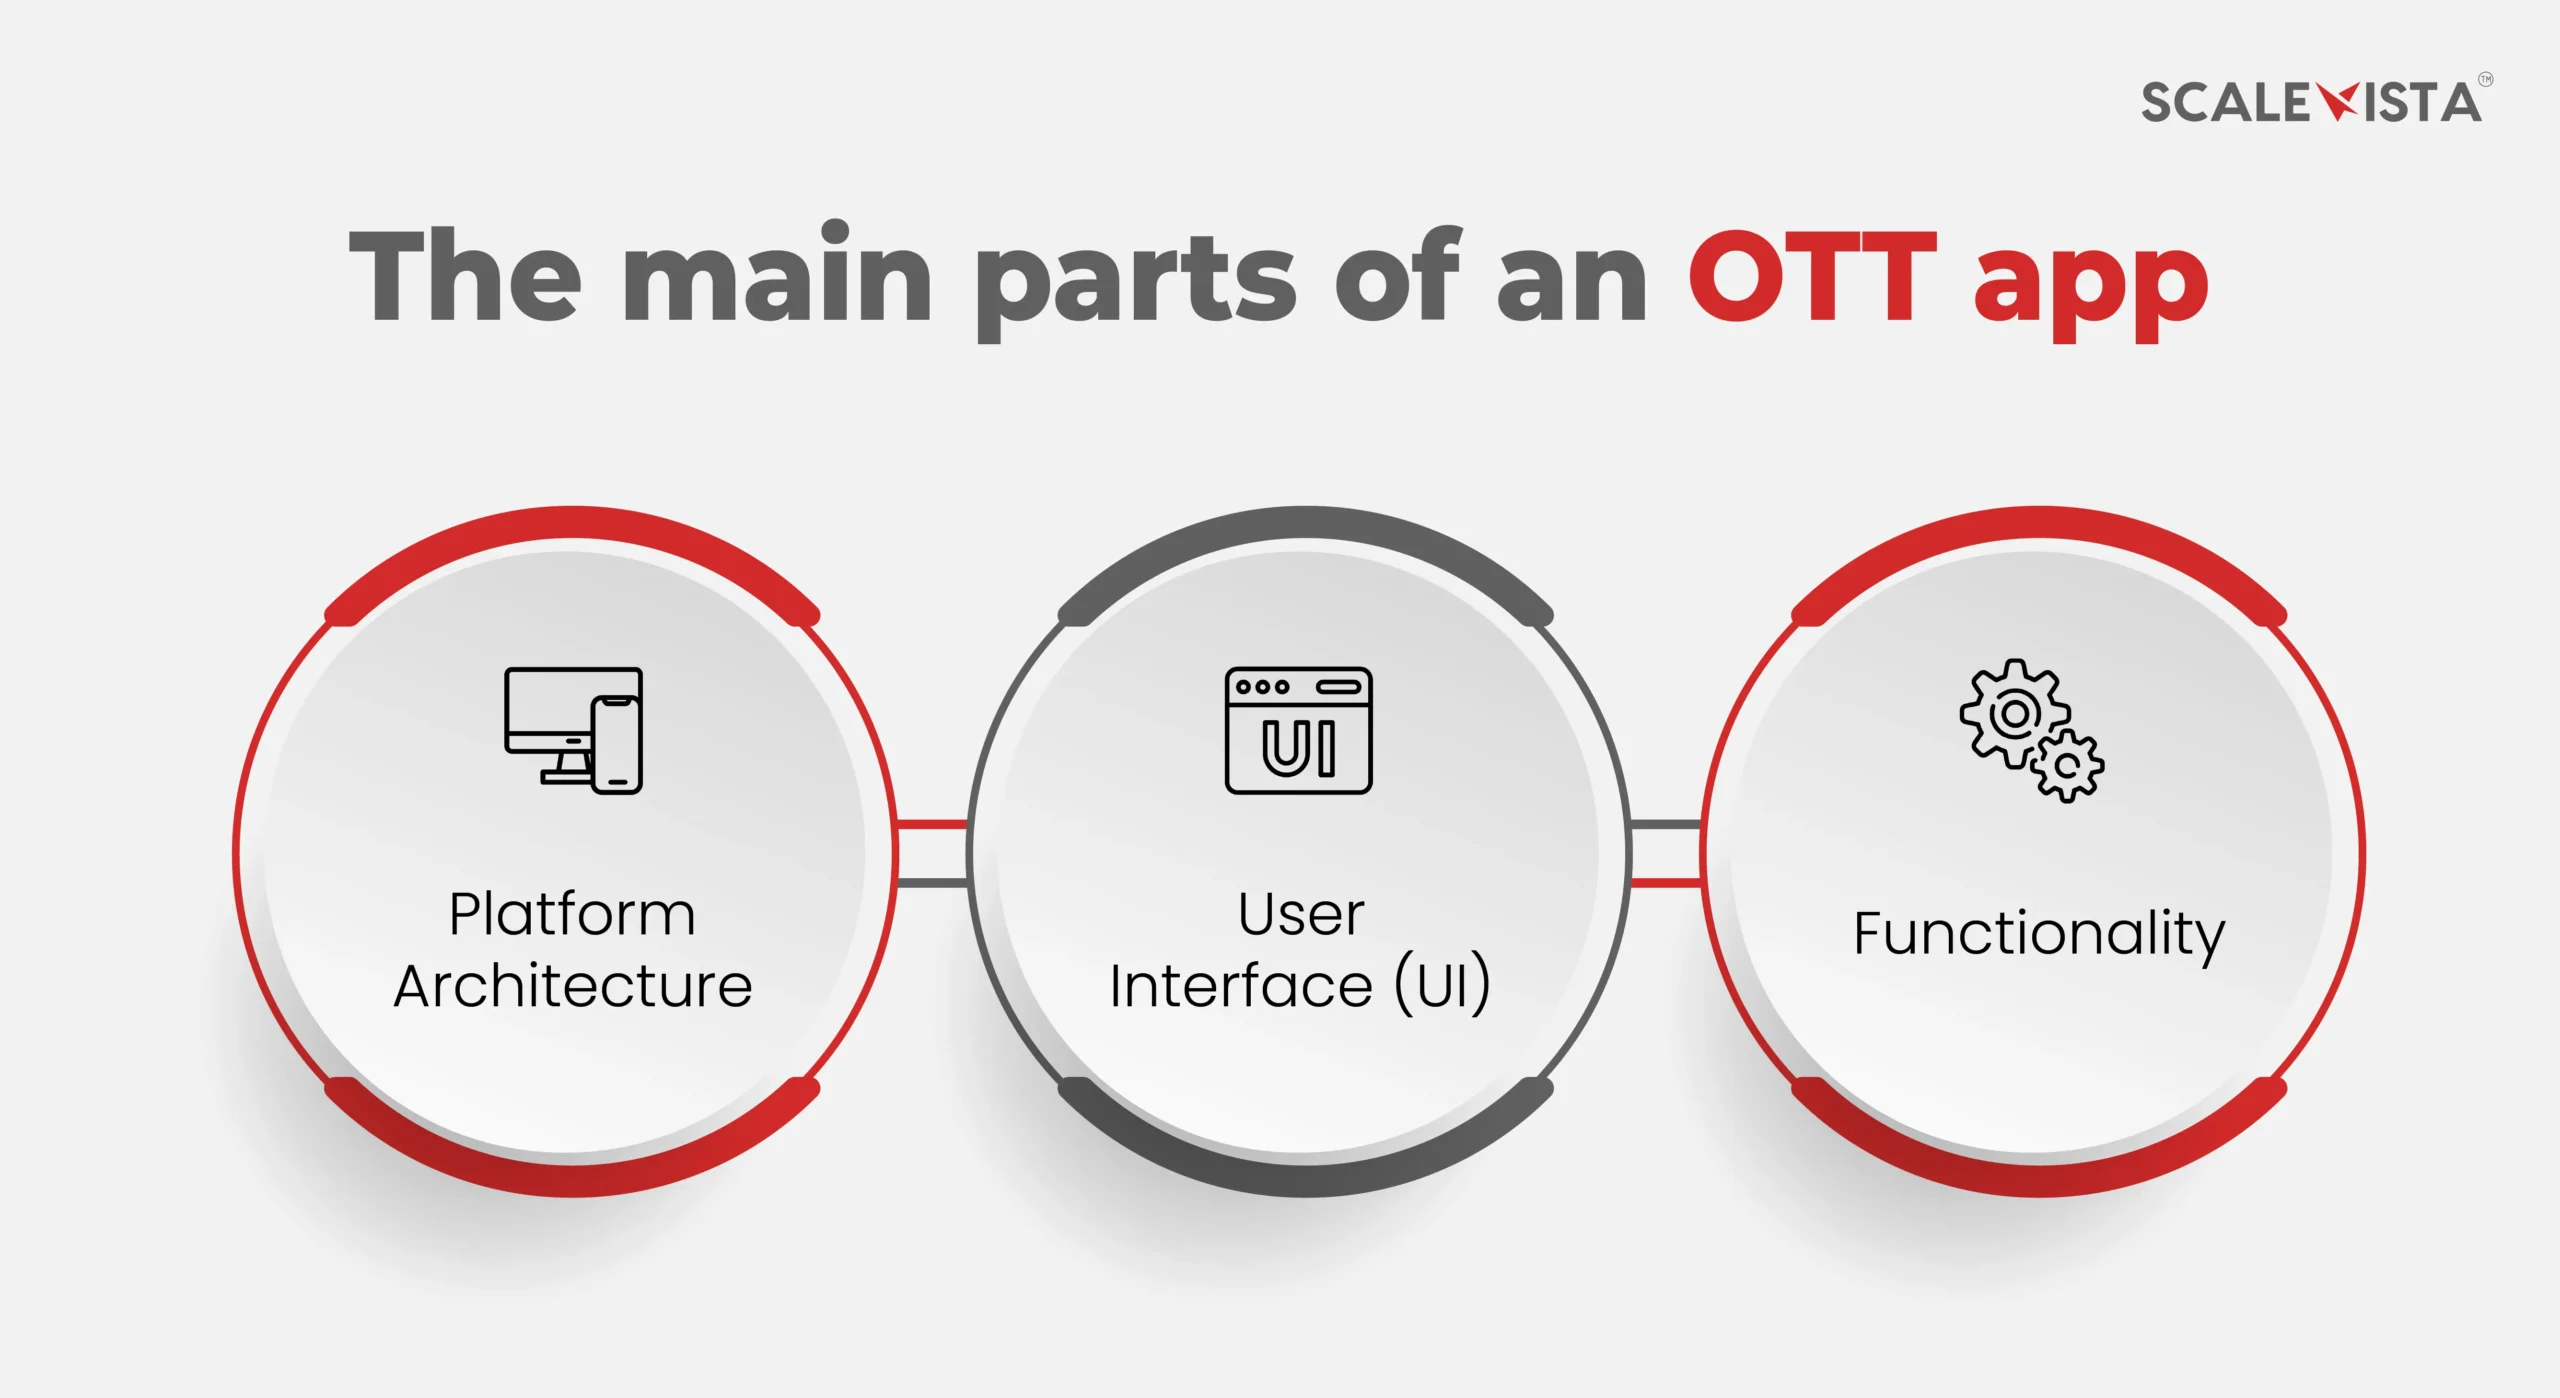 The main parts of an OTT app